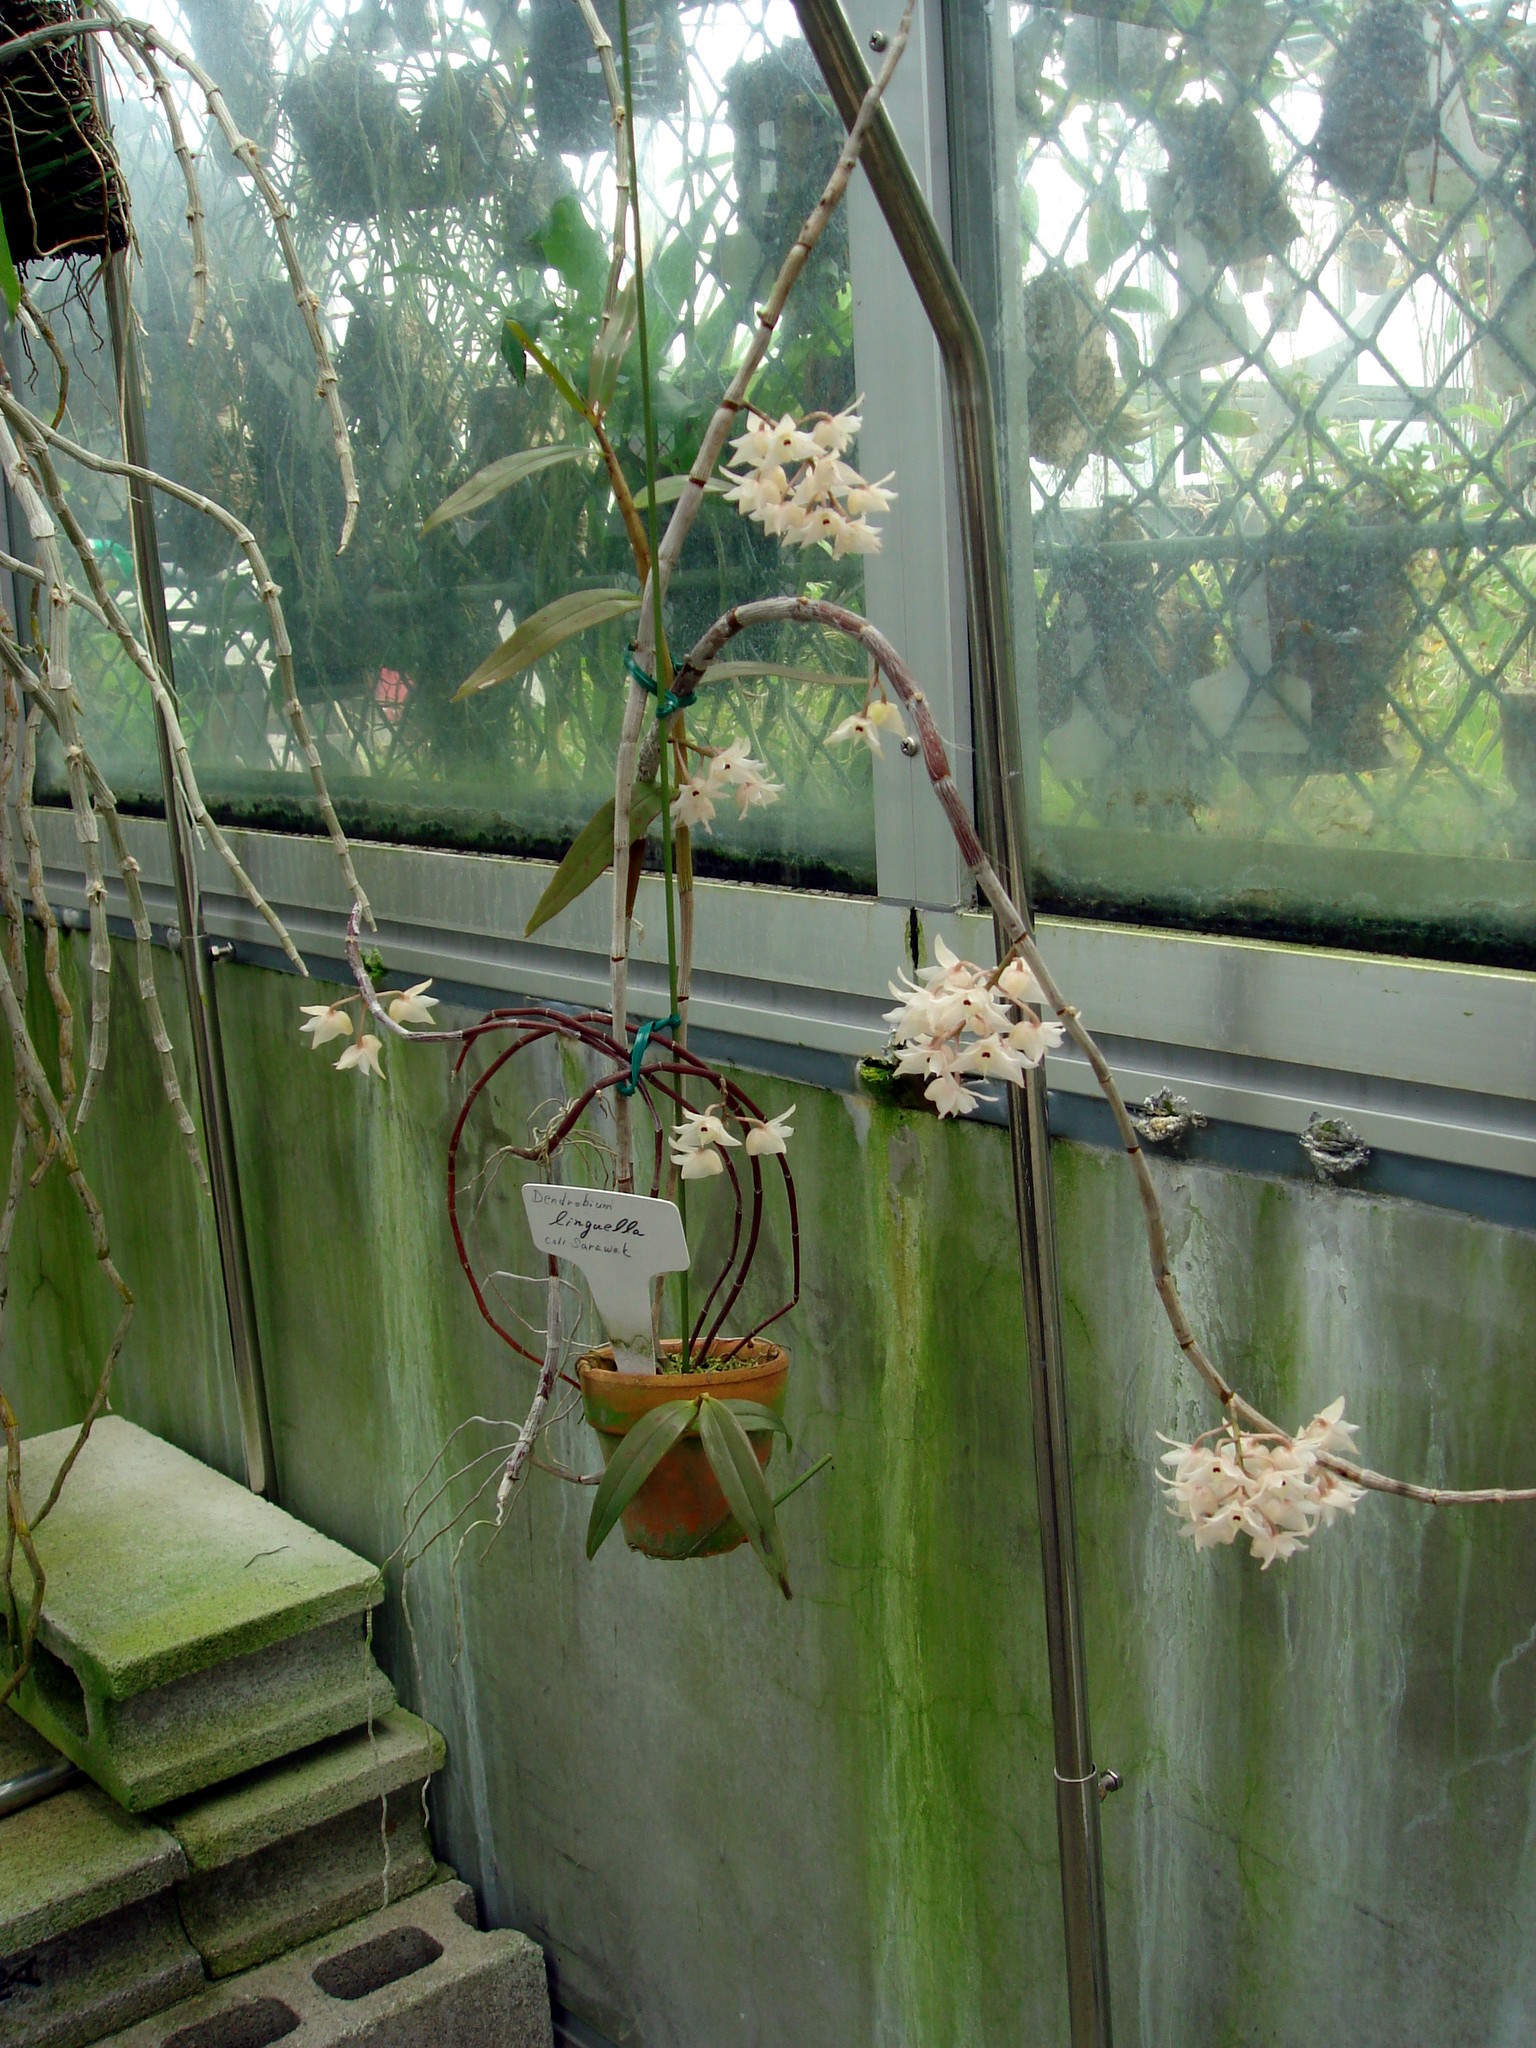 http://orchids.la.coocan.jp/Dendrobium/Dendrobium%20linguella/DSC05935.JPG